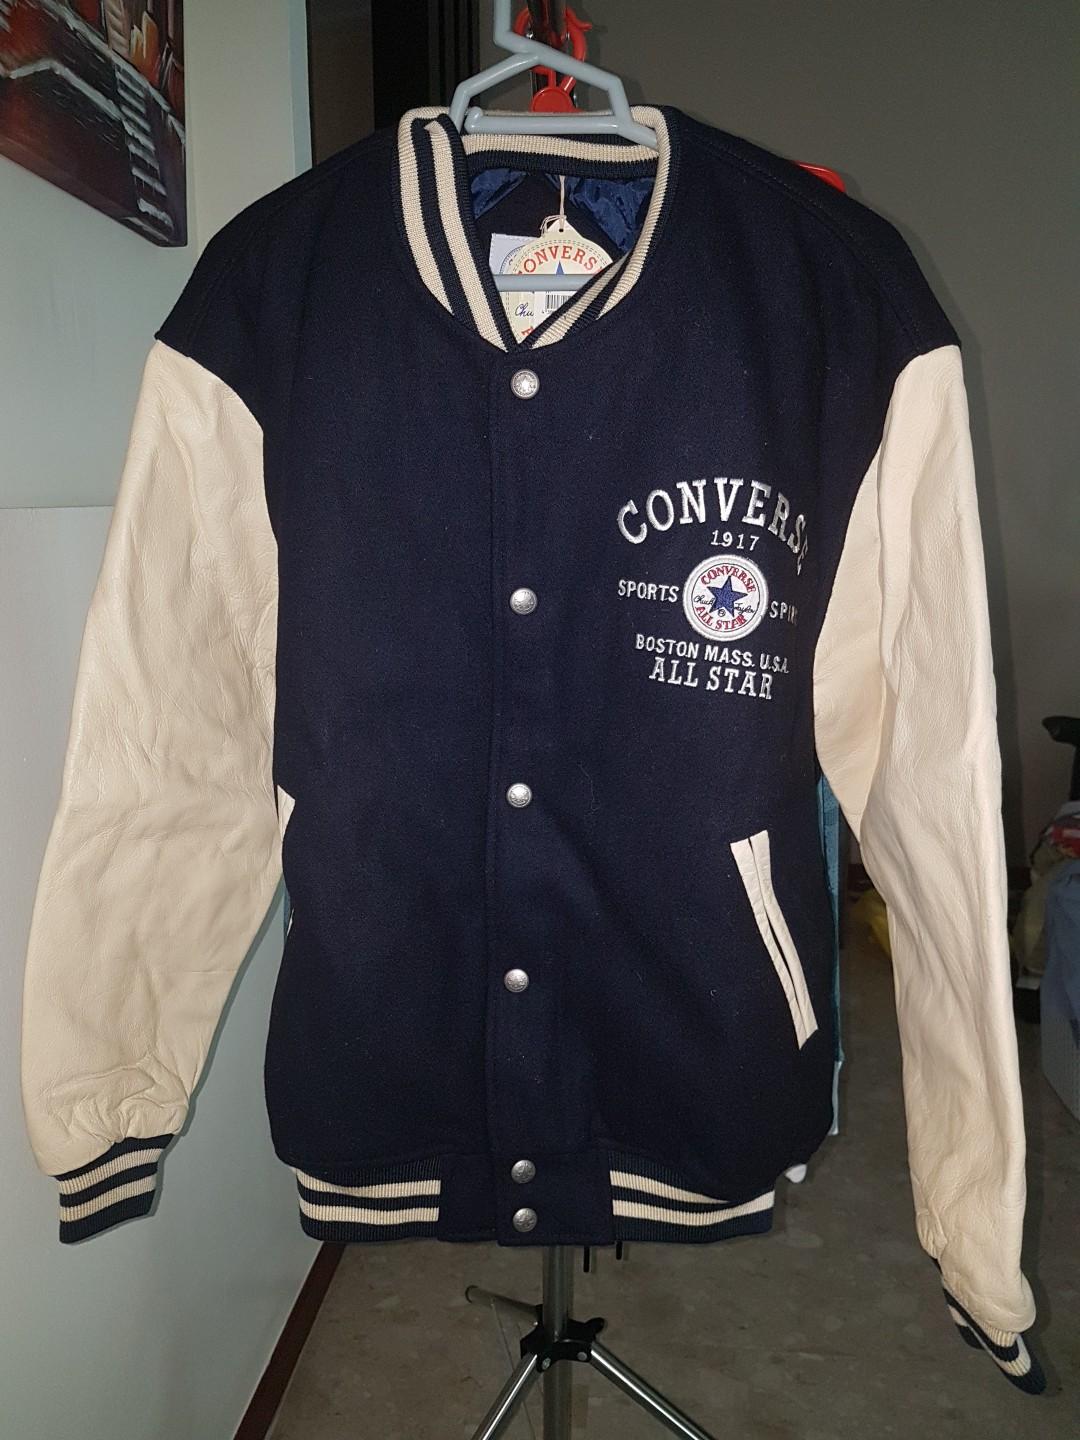 converse leather jacket price